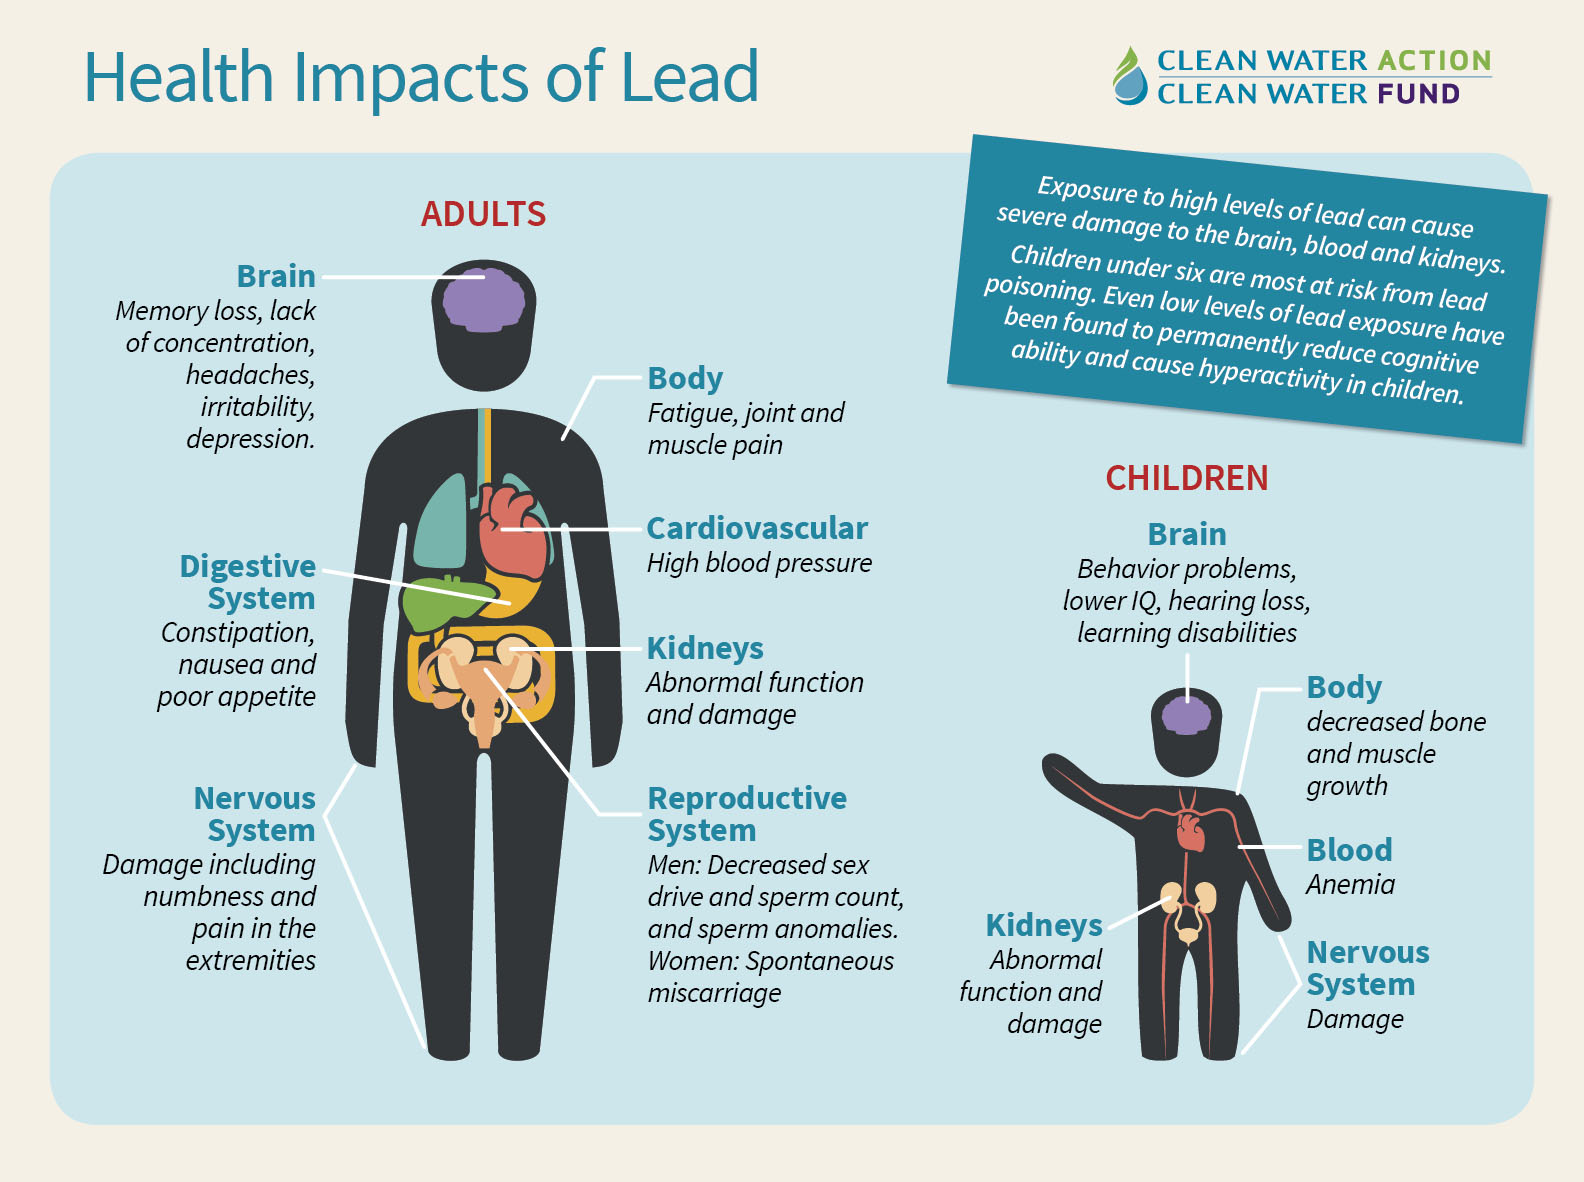 DrinkingWater_Health Impacts of Lead.jpg